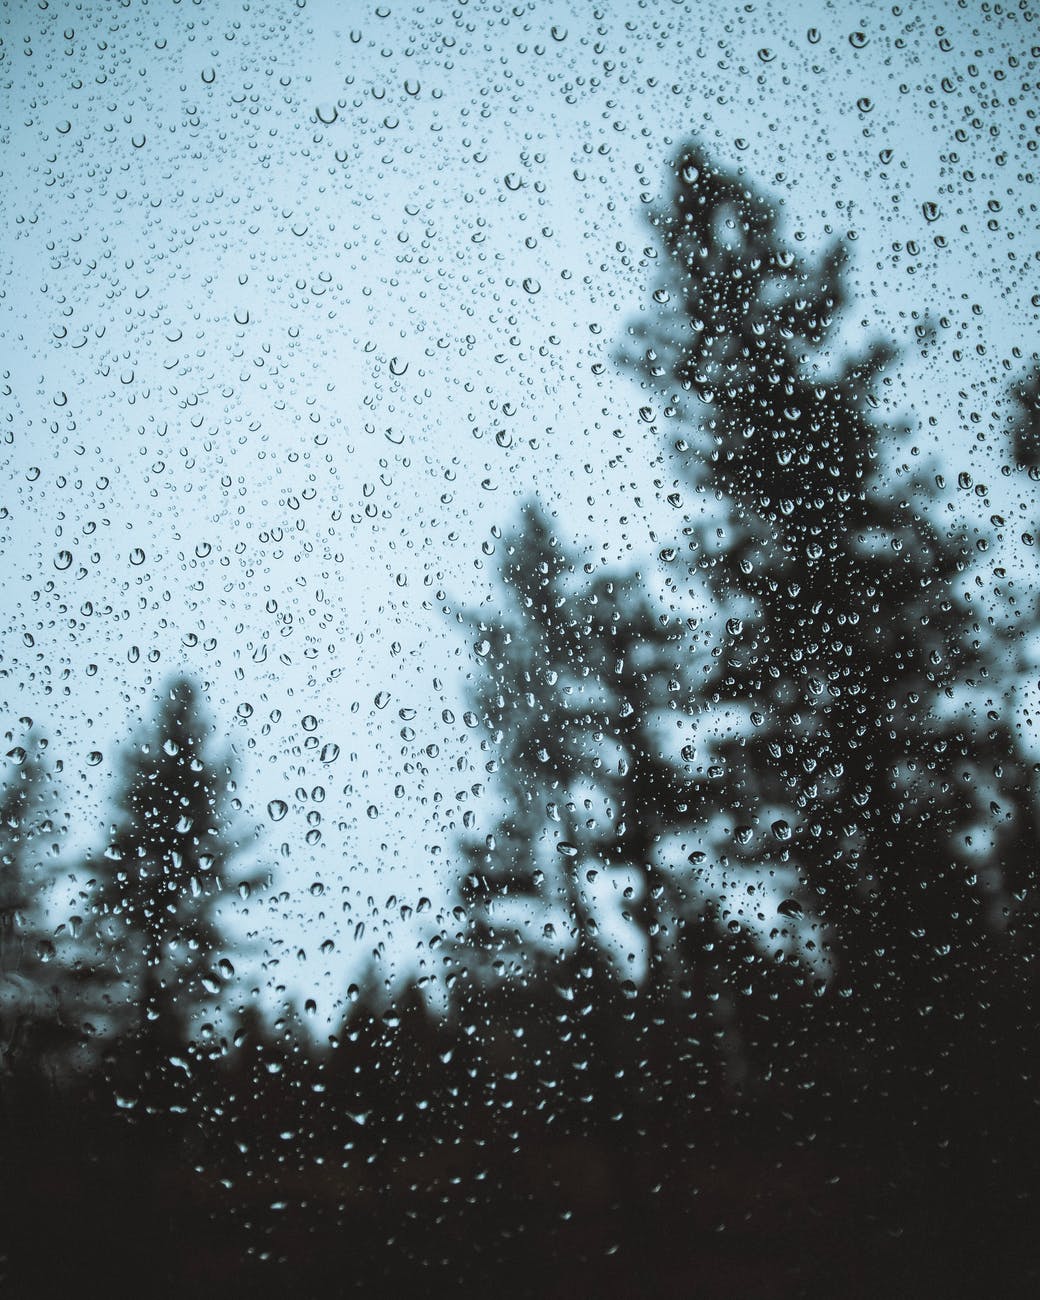 rain droplets on glass